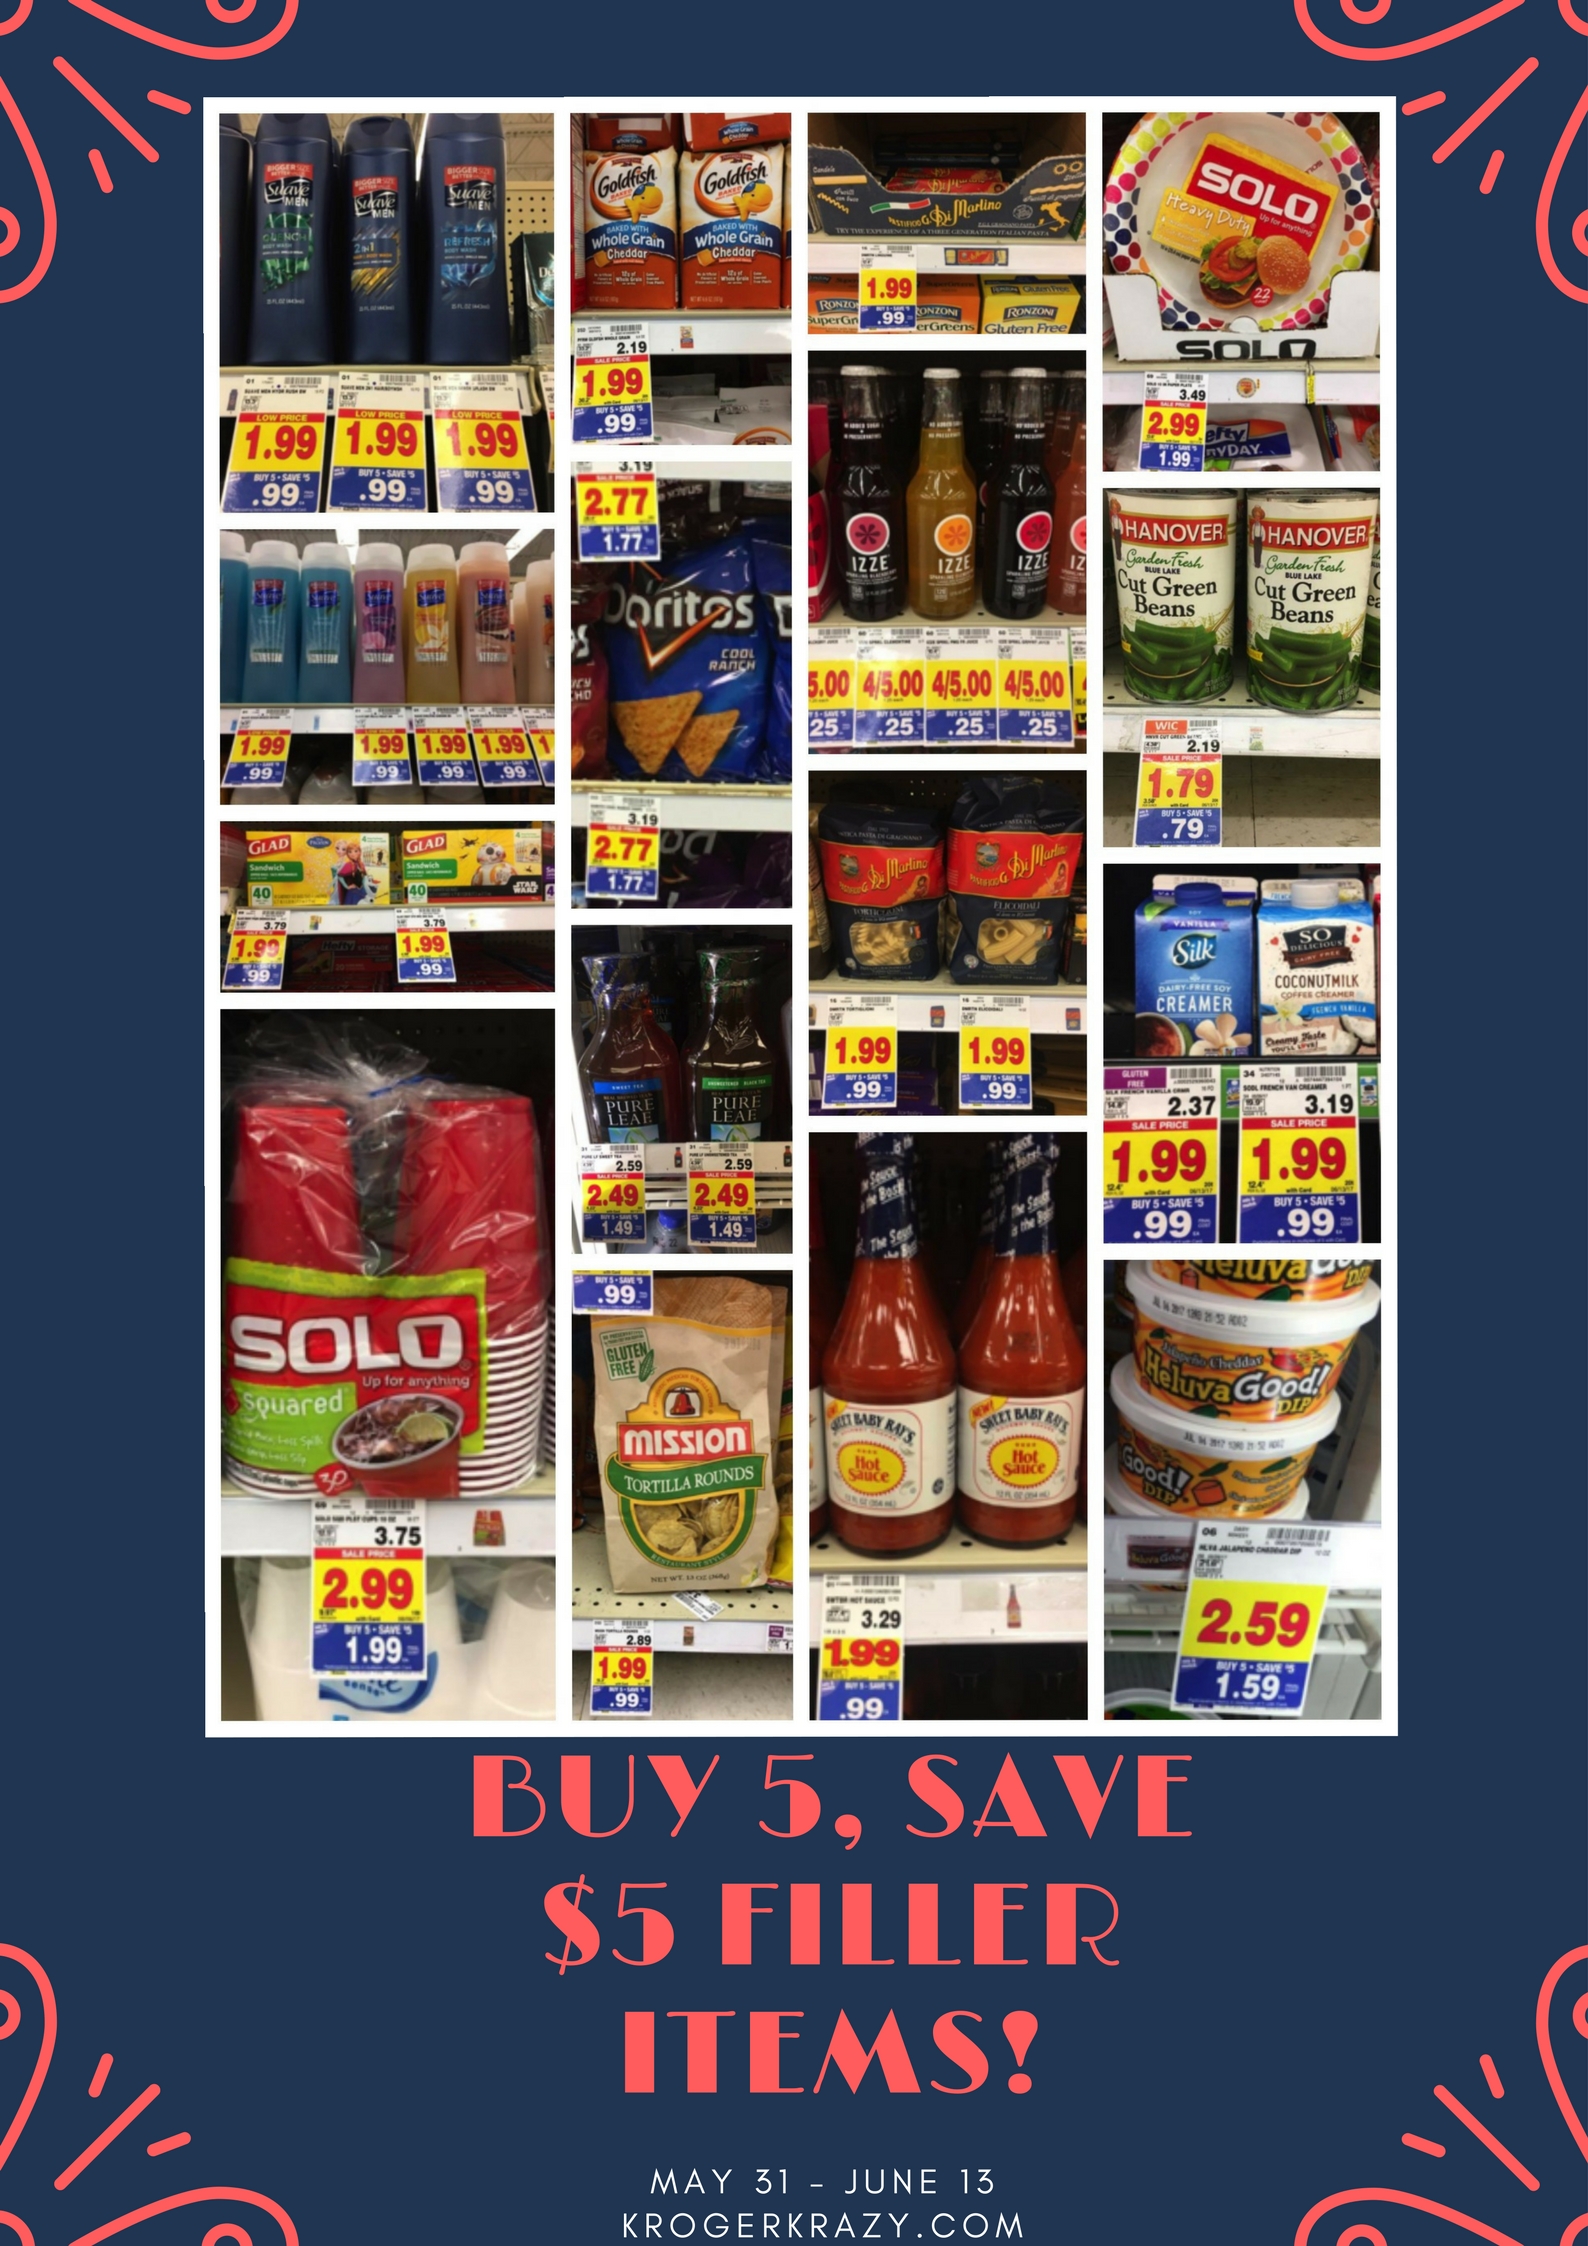 buy 5, Save $5 Filler items!